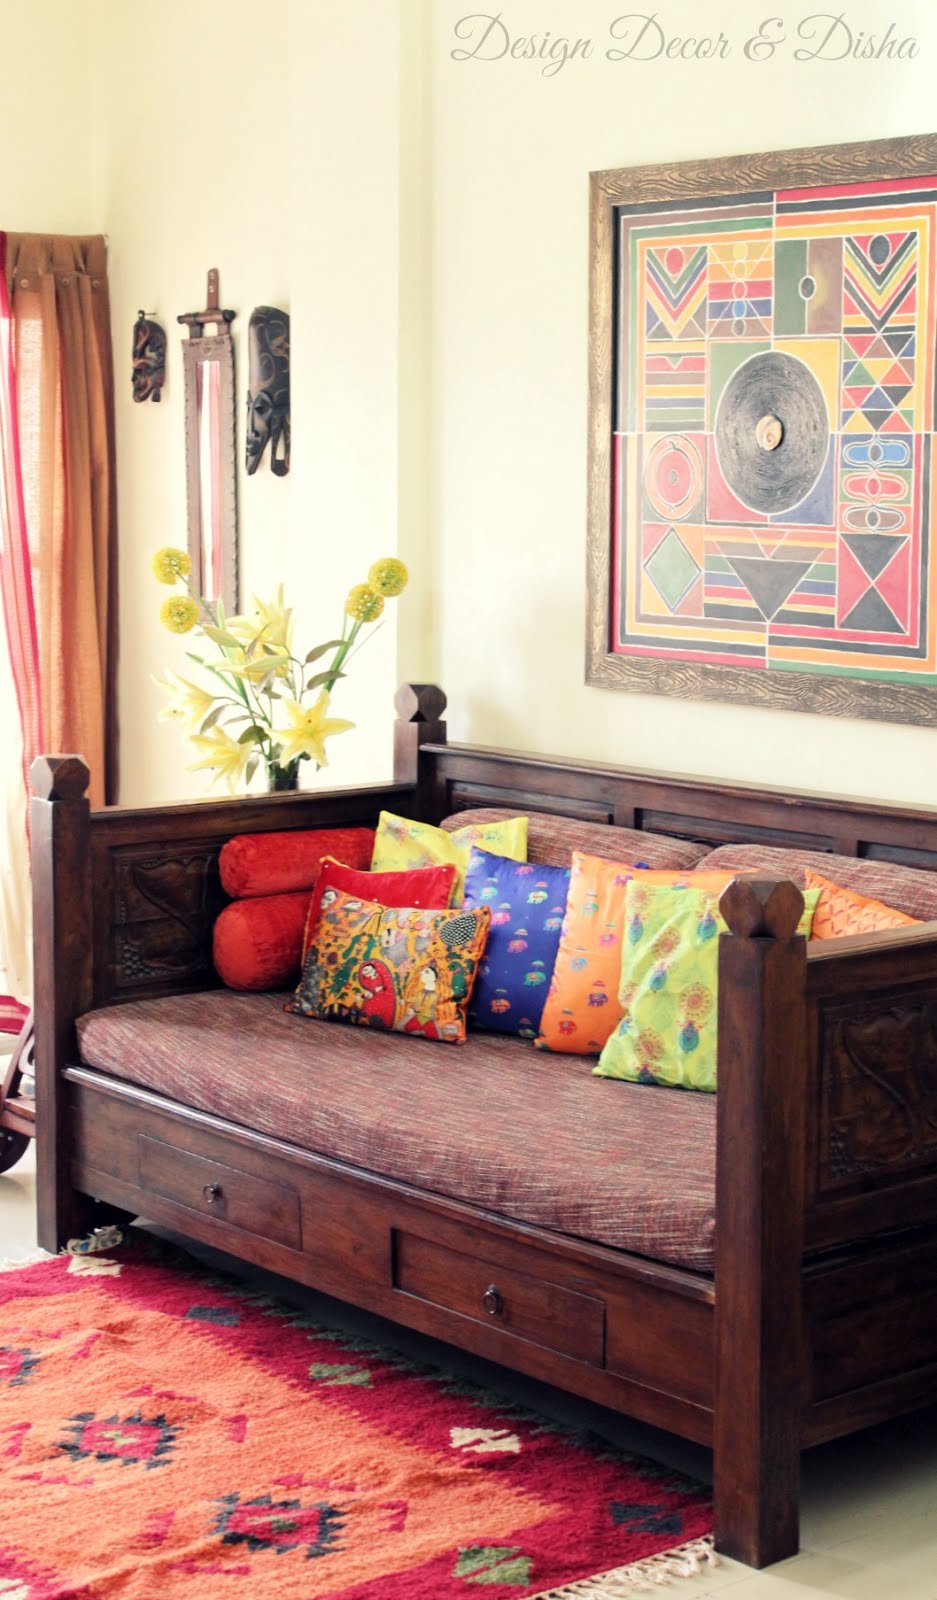 Design Decor & Disha | An Indian Design & Decor Blog: Home ...